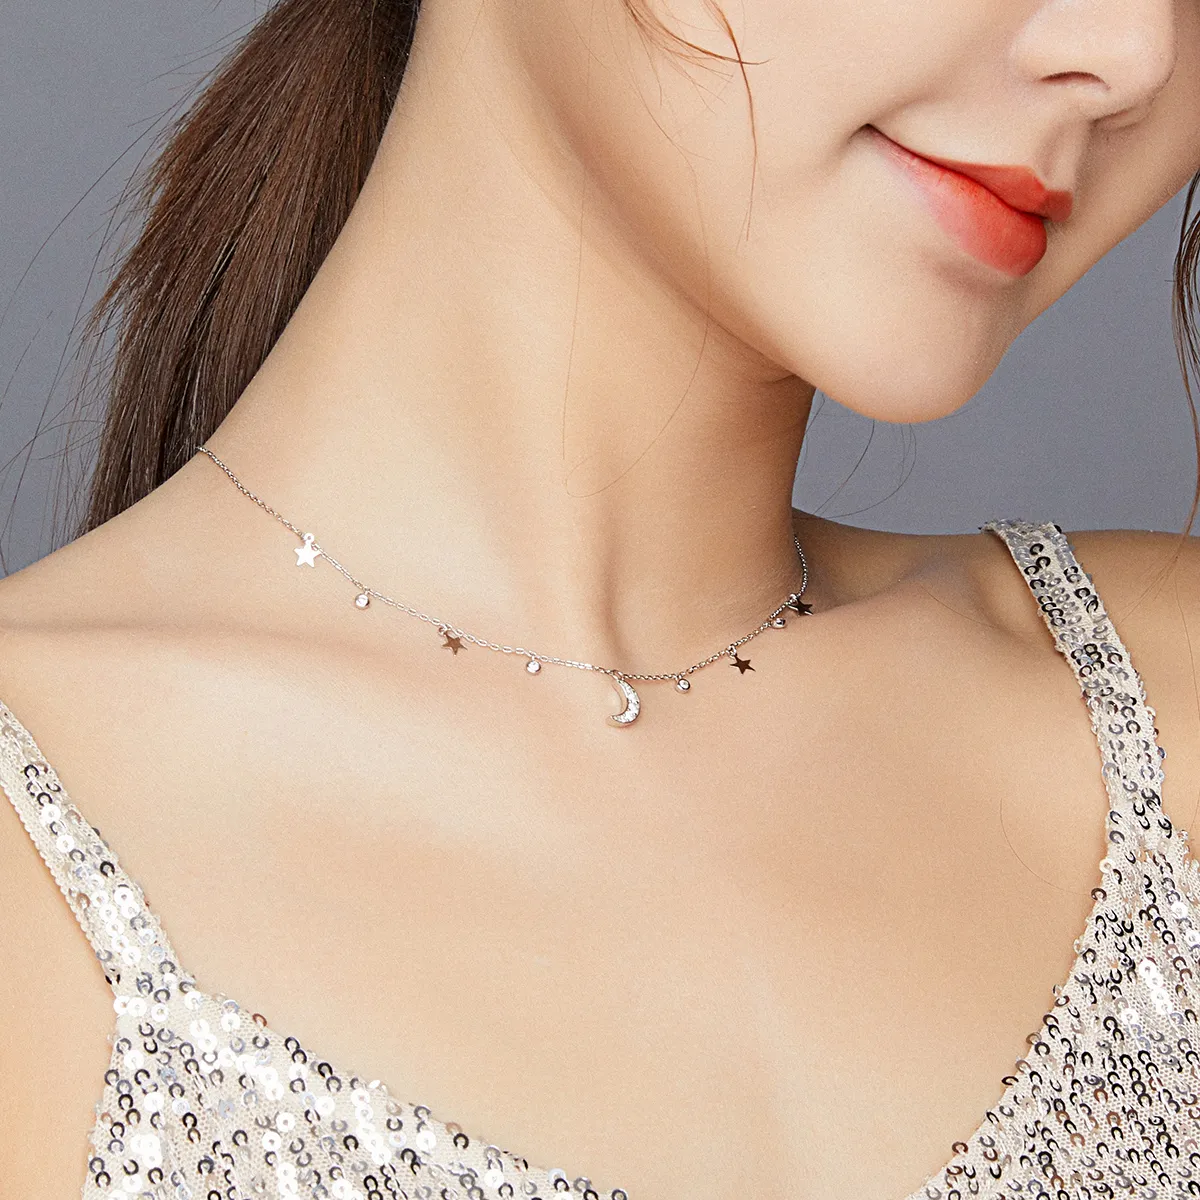 Pandora Style Silver Dream Star Moon Pendant Necklace - SCN420